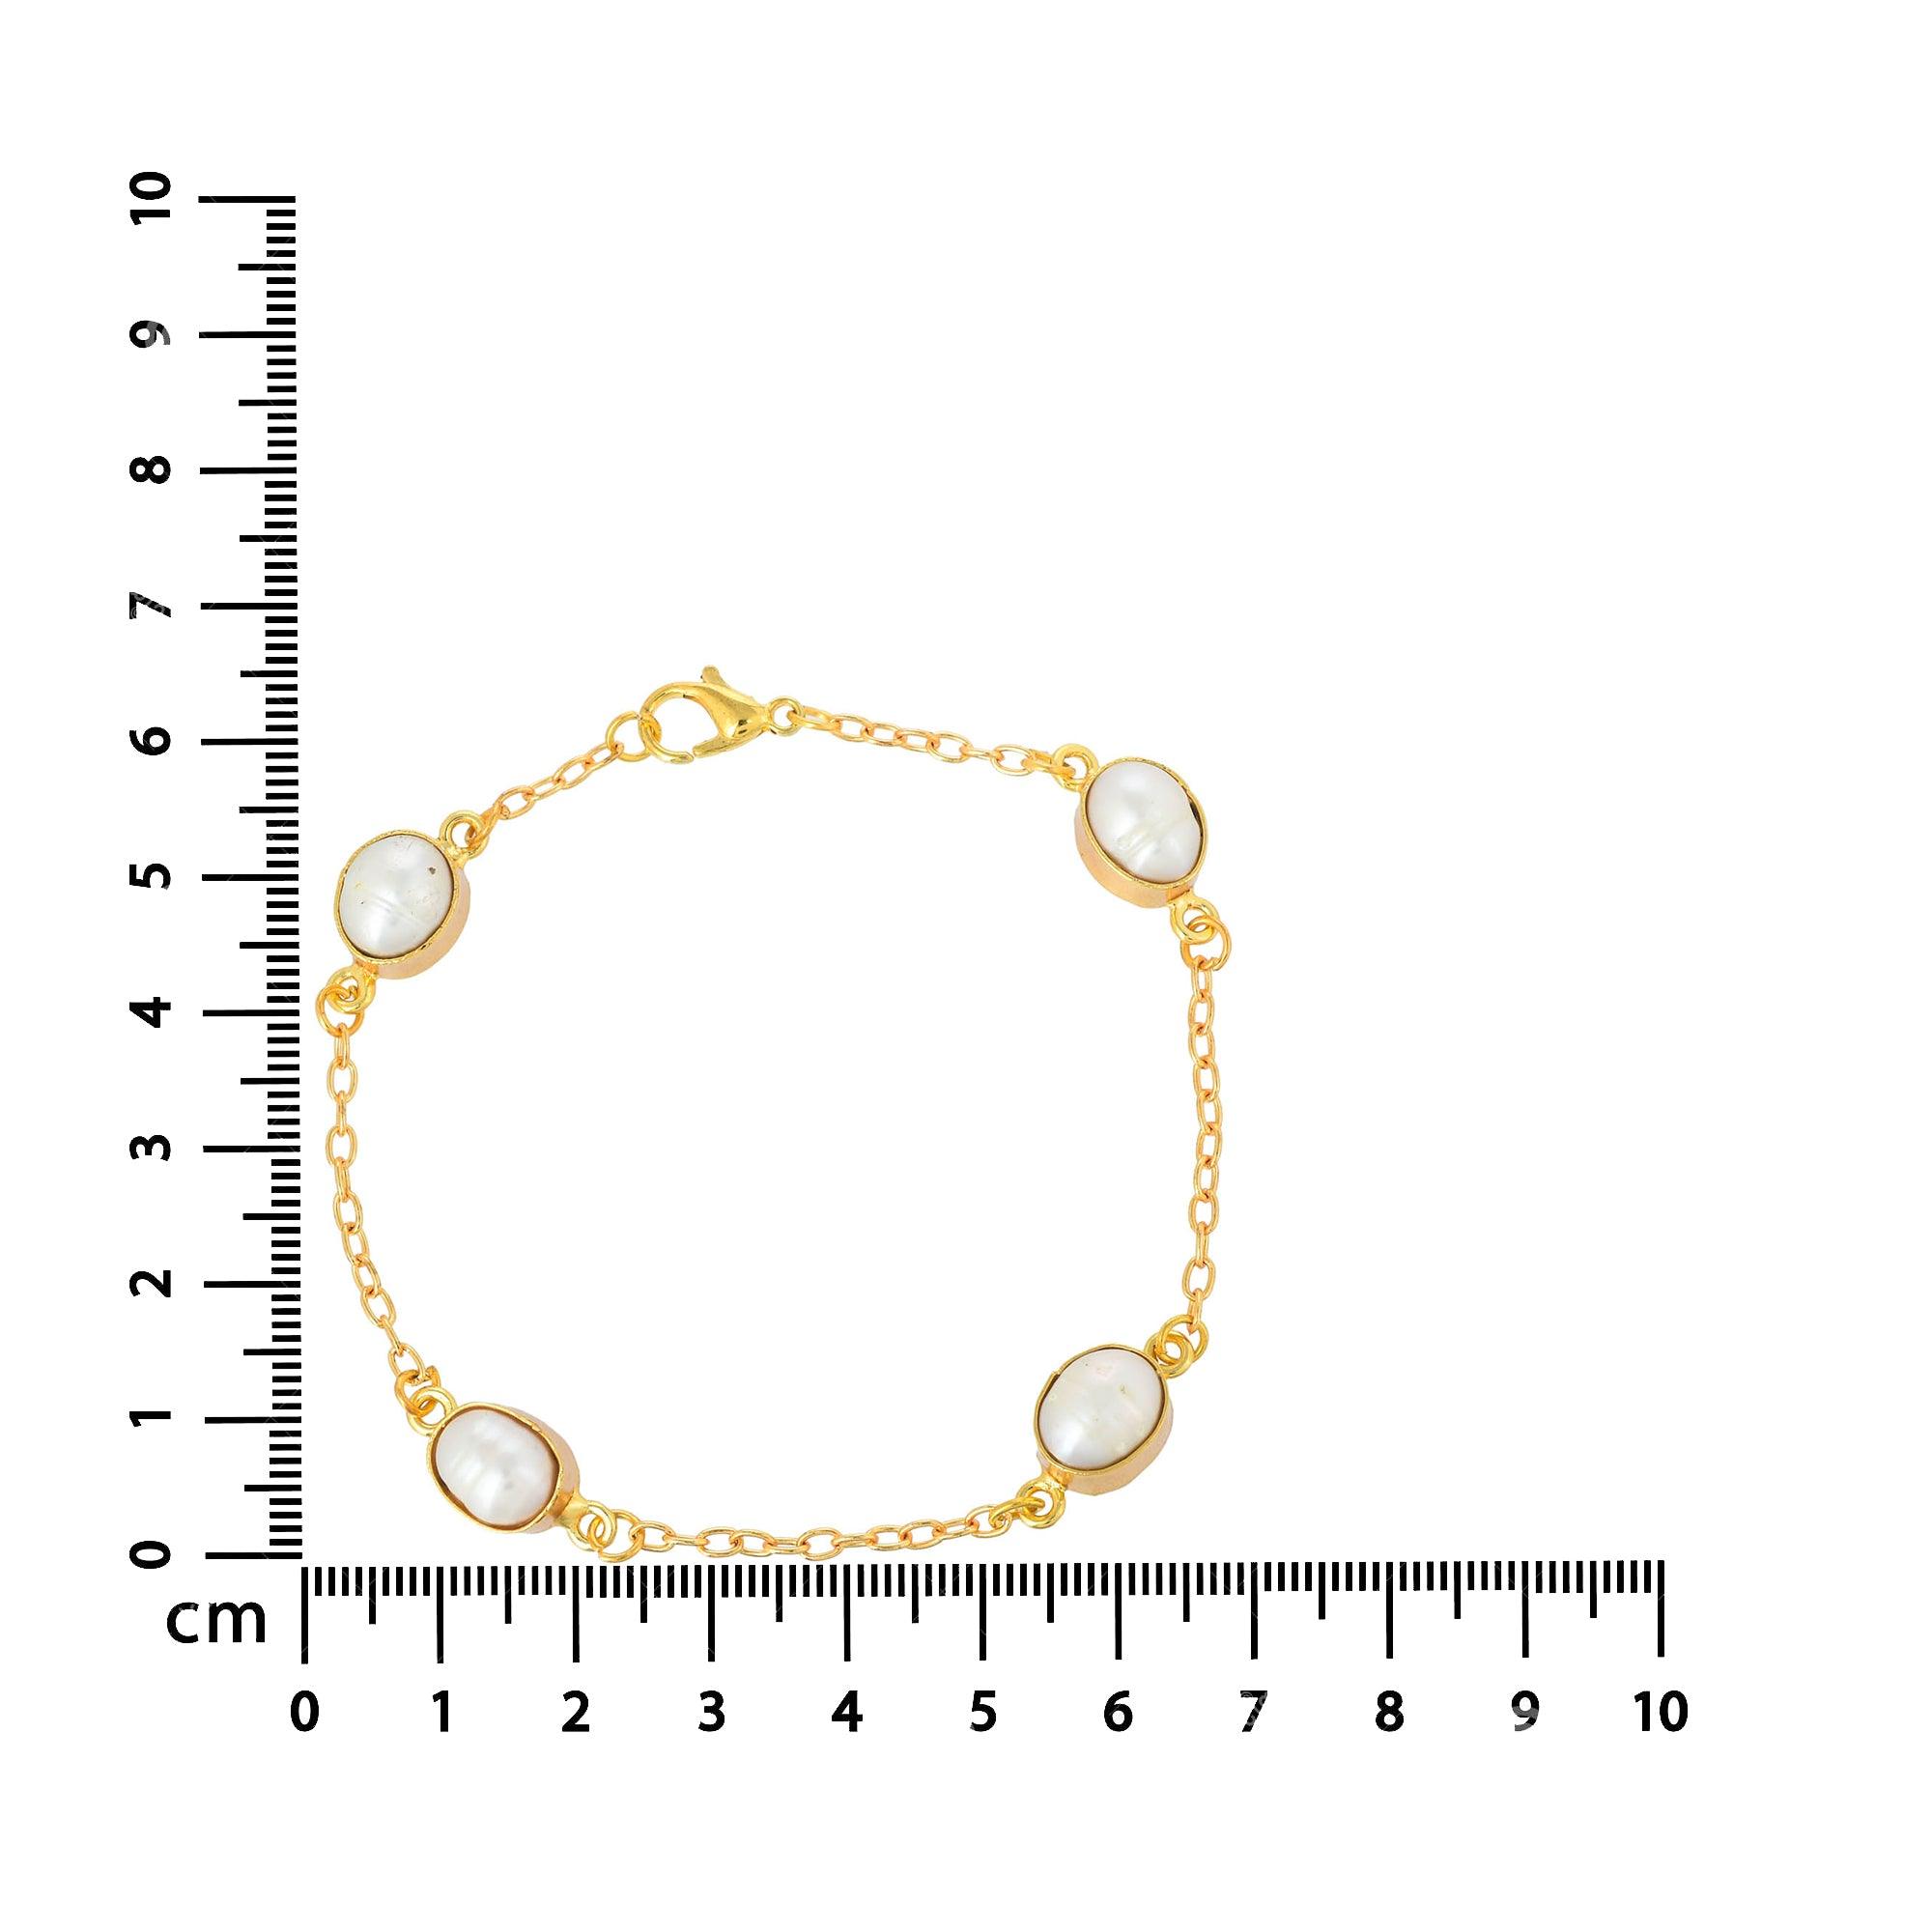 Chained Pearl Bracelet - Zuriijewels